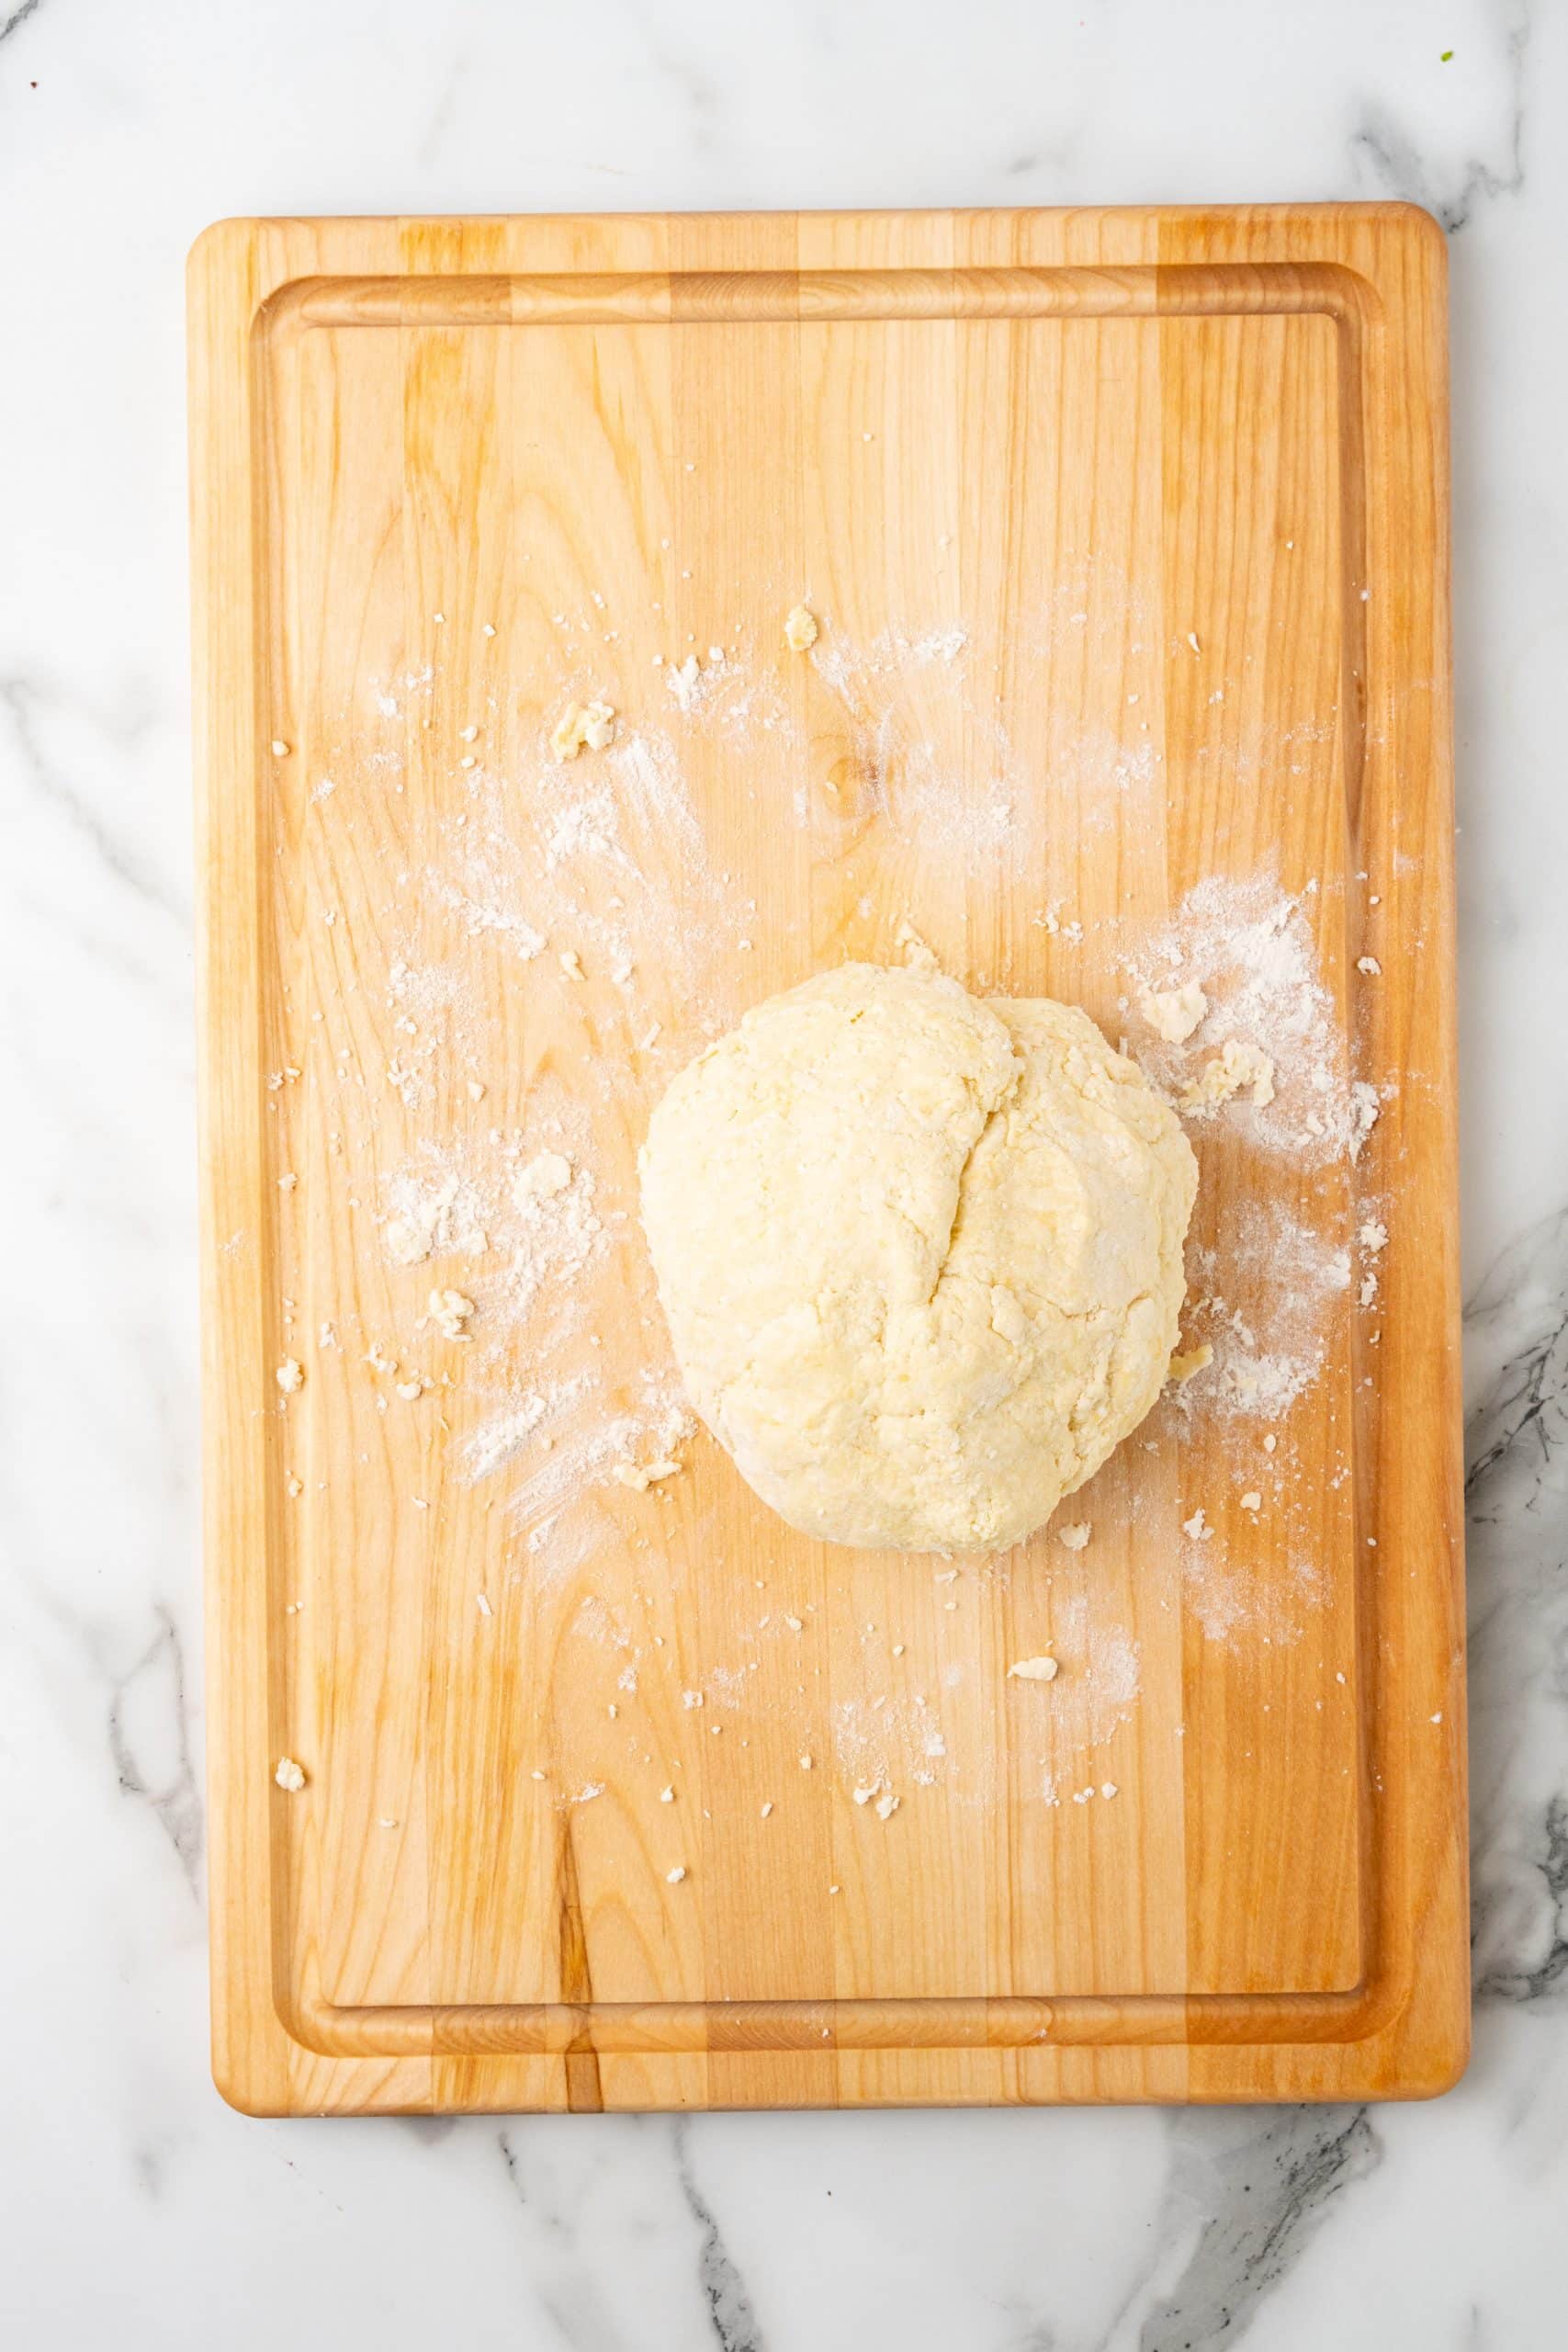 a ball of gnocchi dough on a floured wooden cutting board